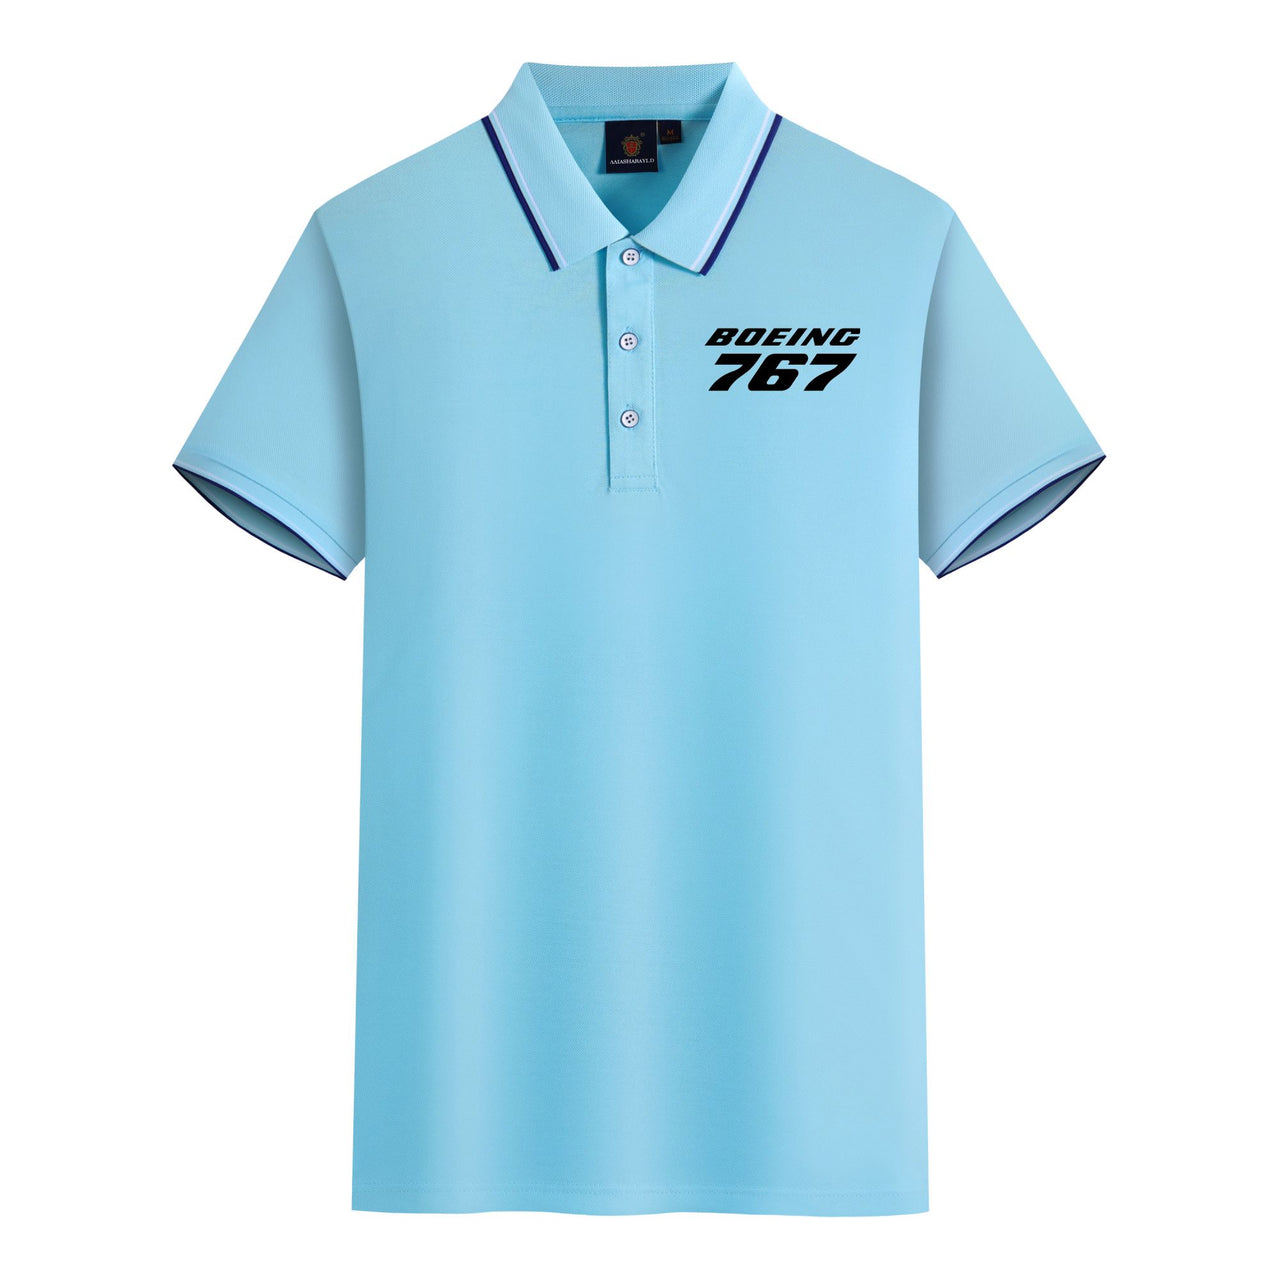 Boeing 767 & Text Designed Stylish Polo T-Shirts